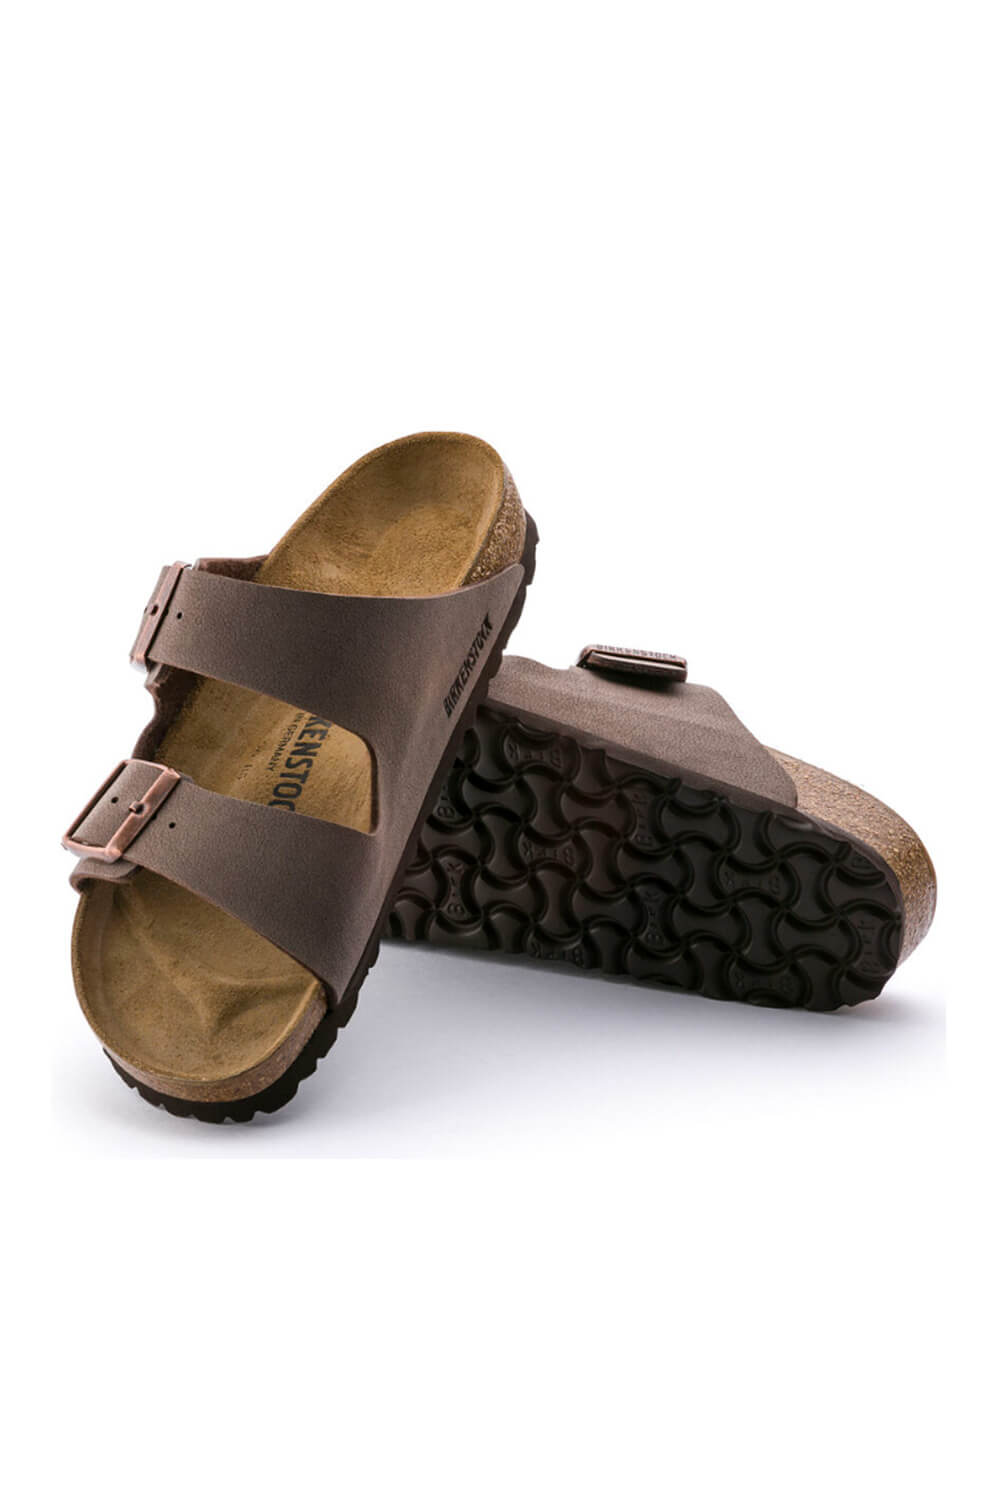 Birkenstock Arizona Birkibuc Sandals for Women in Mocha